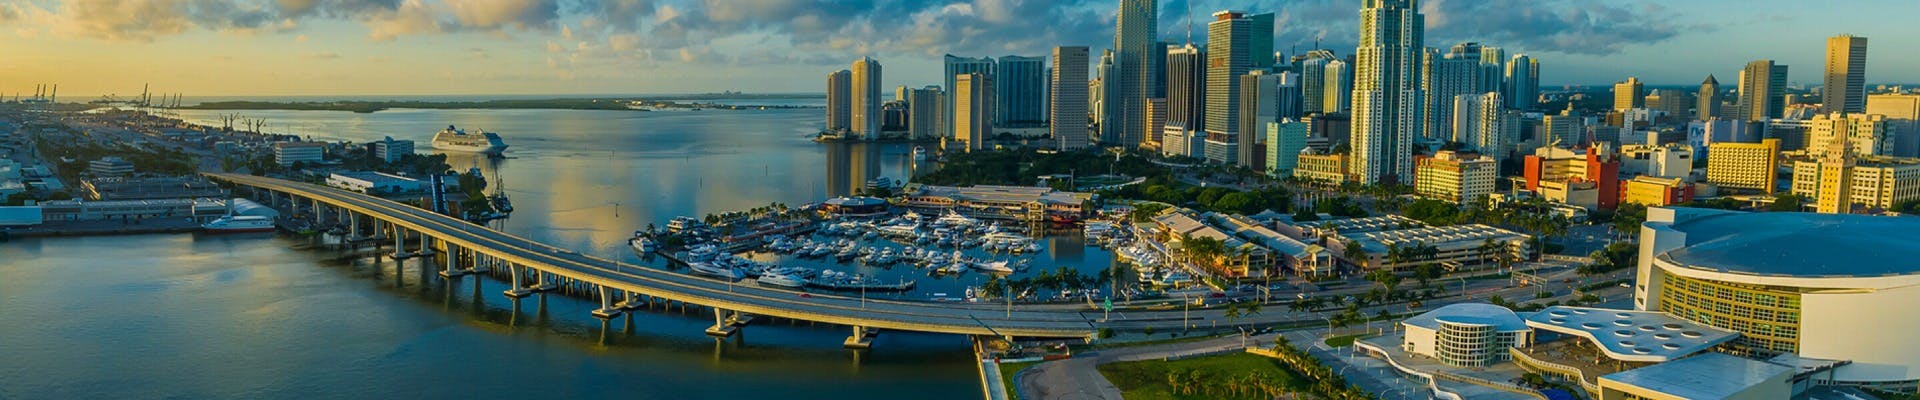 Yachting in Miami, FL